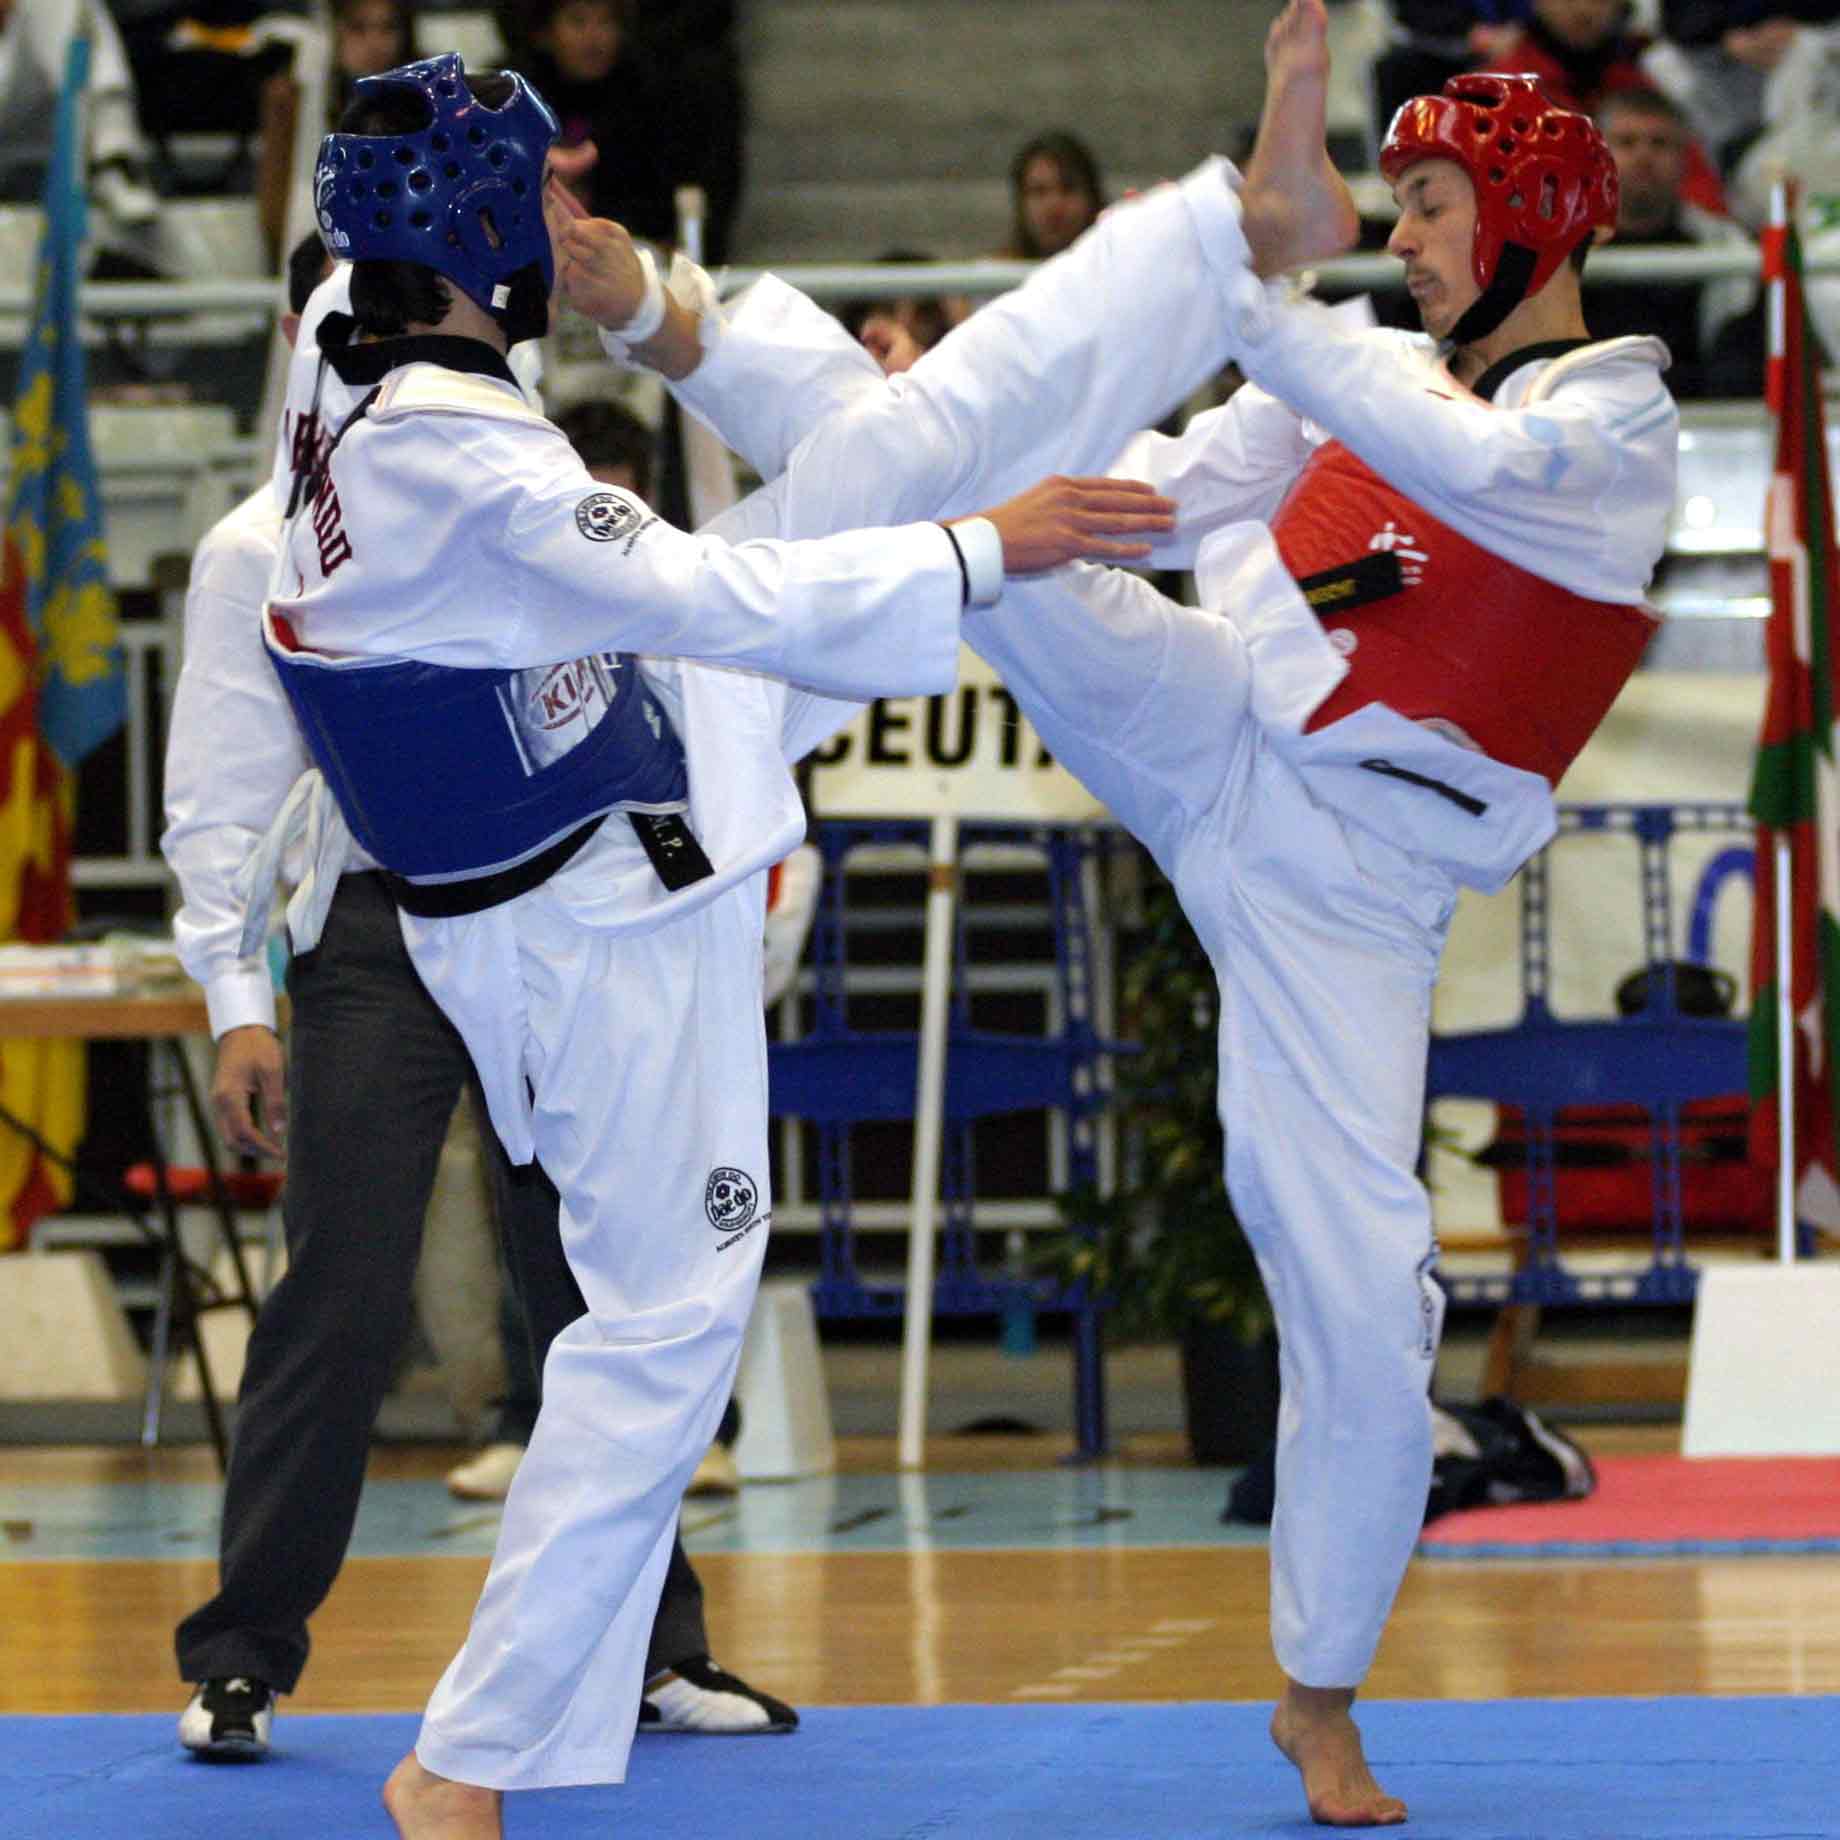 Porto Cervo ospita il Taekwondo mondiale